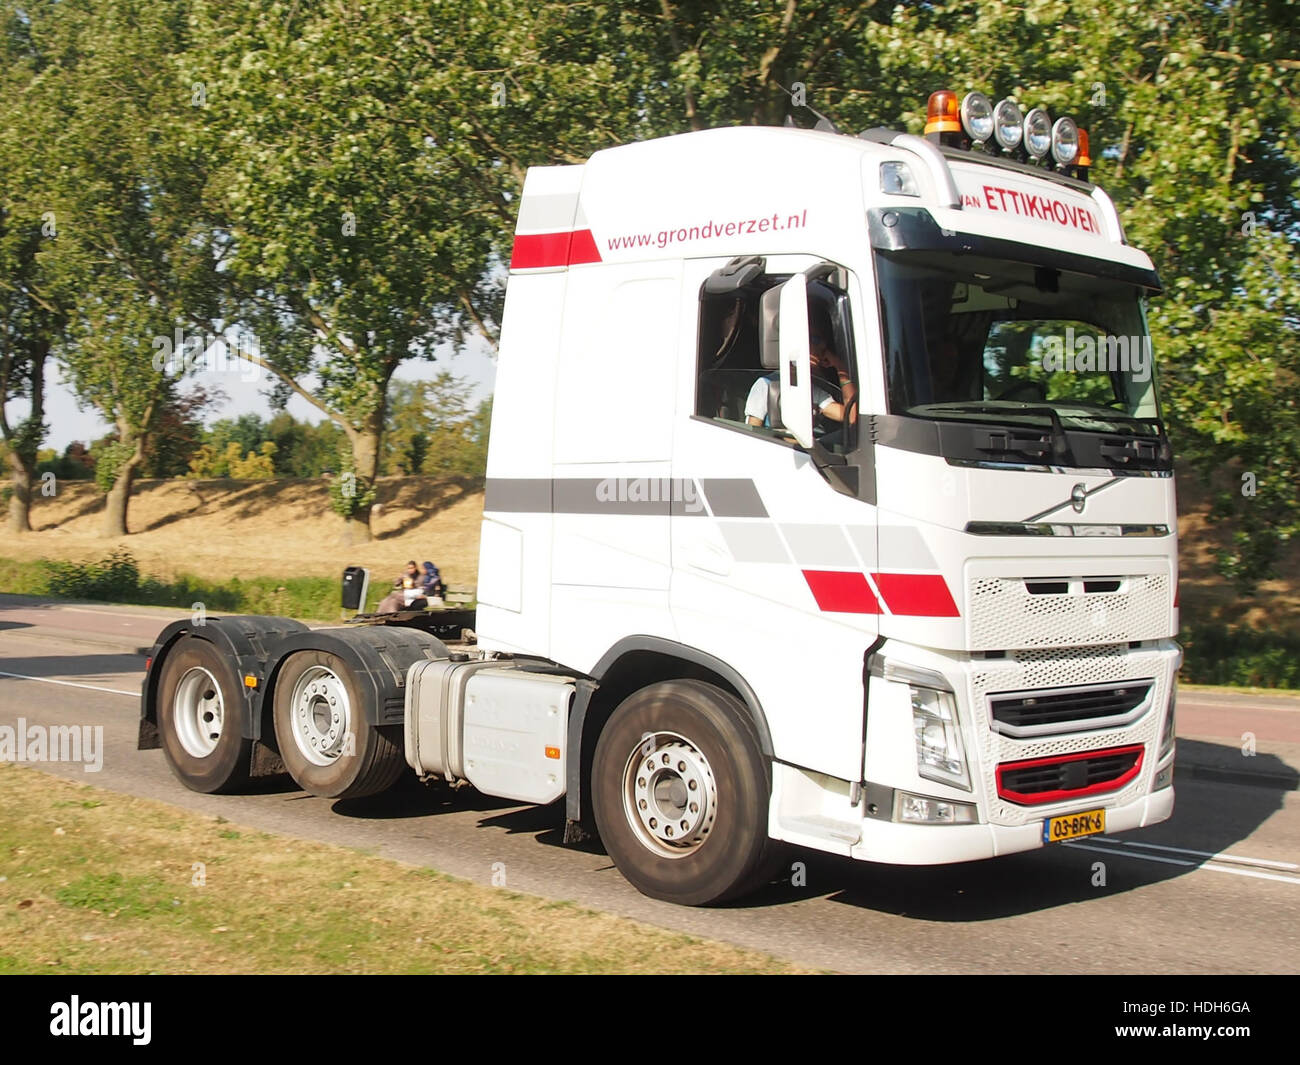 Volvo Lkw, van Ettinkhoven, Truckrun 2016 pic1 Stockfoto